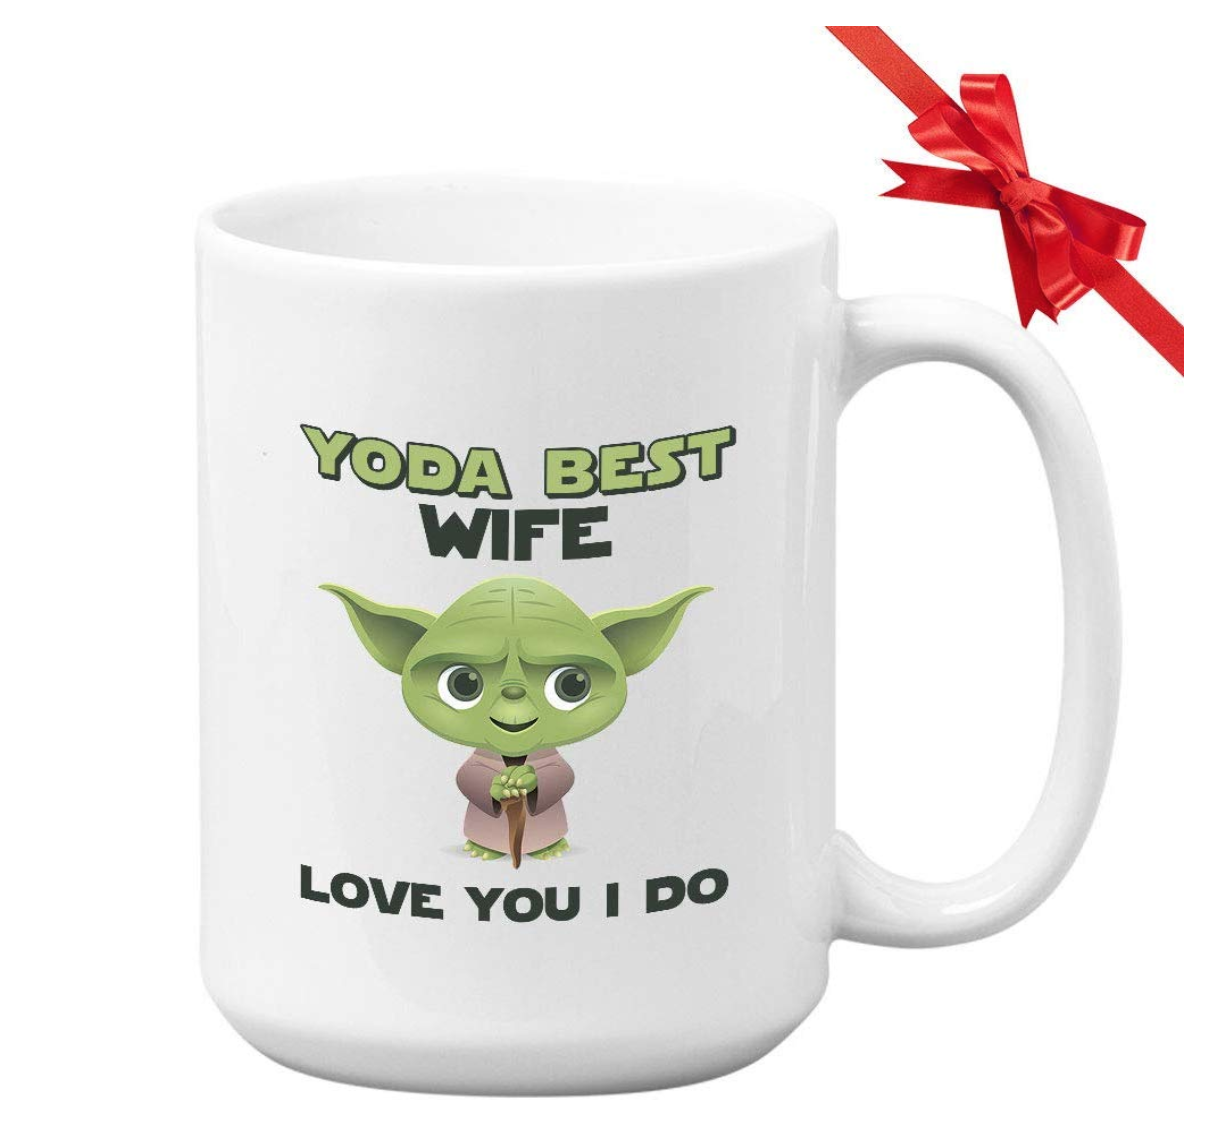 Baby Yoda Mug, Since You Know It All Mug, Funny Mug, Yoda Best Mug